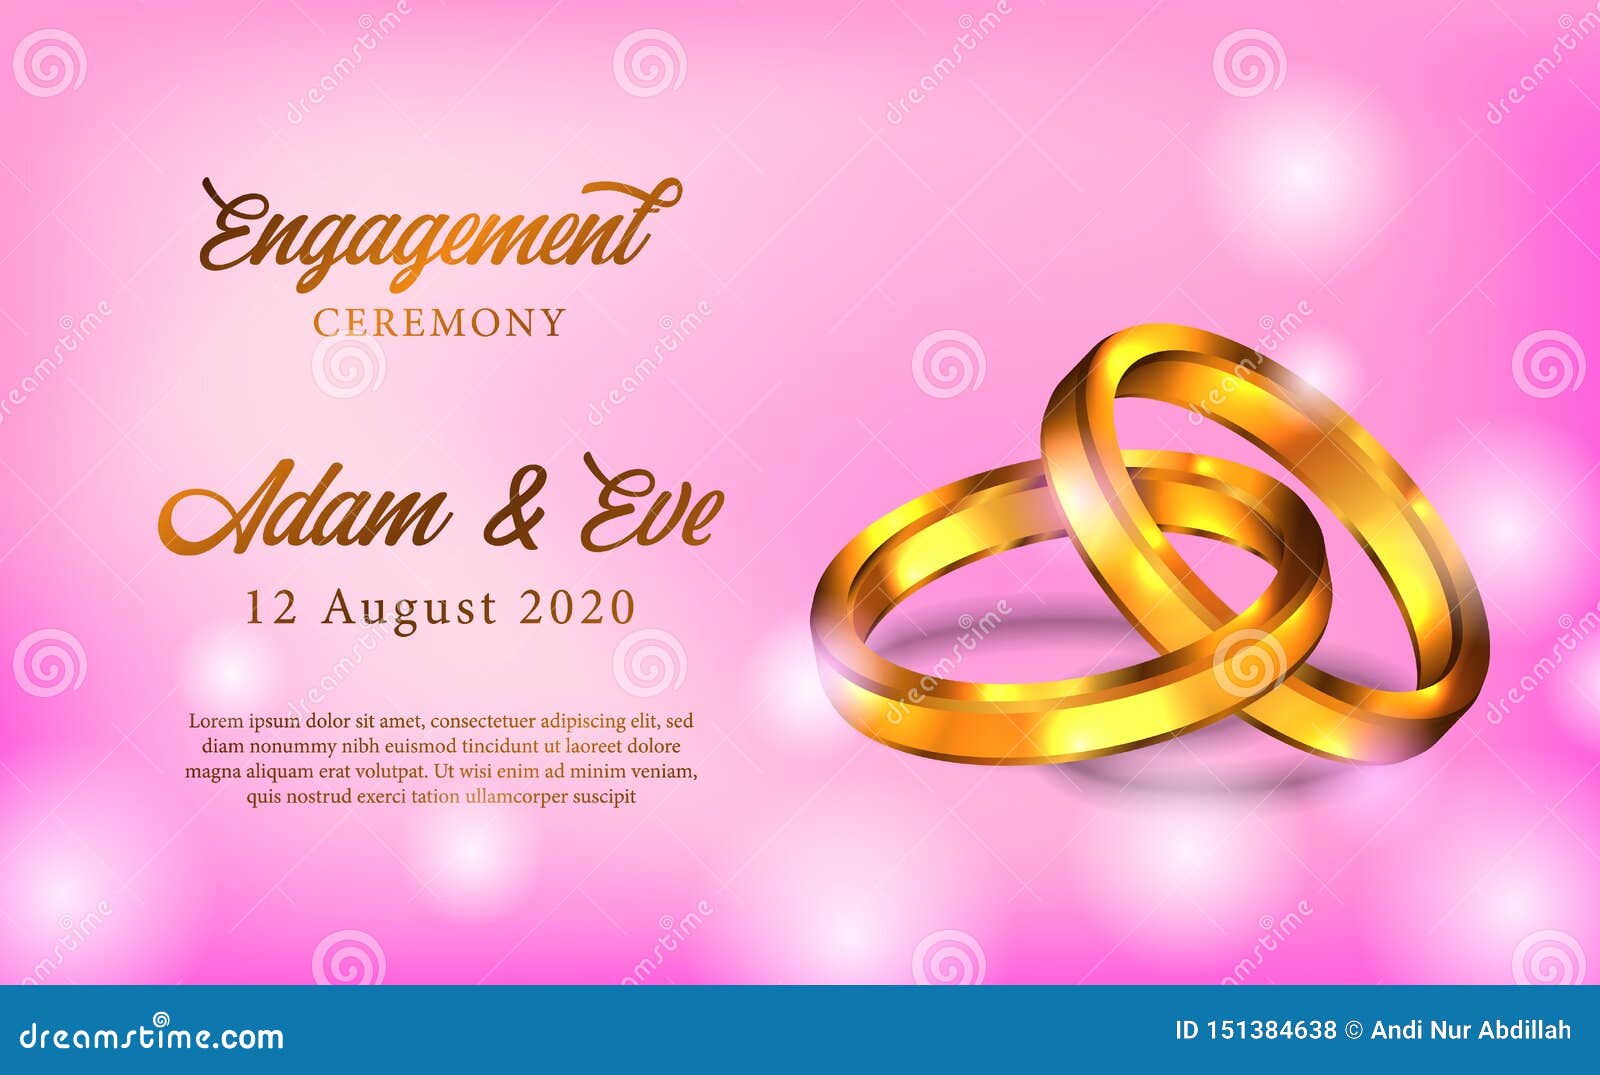 3D Golden Ring Engagement Propose Wedding Romantic Poster Banner ...